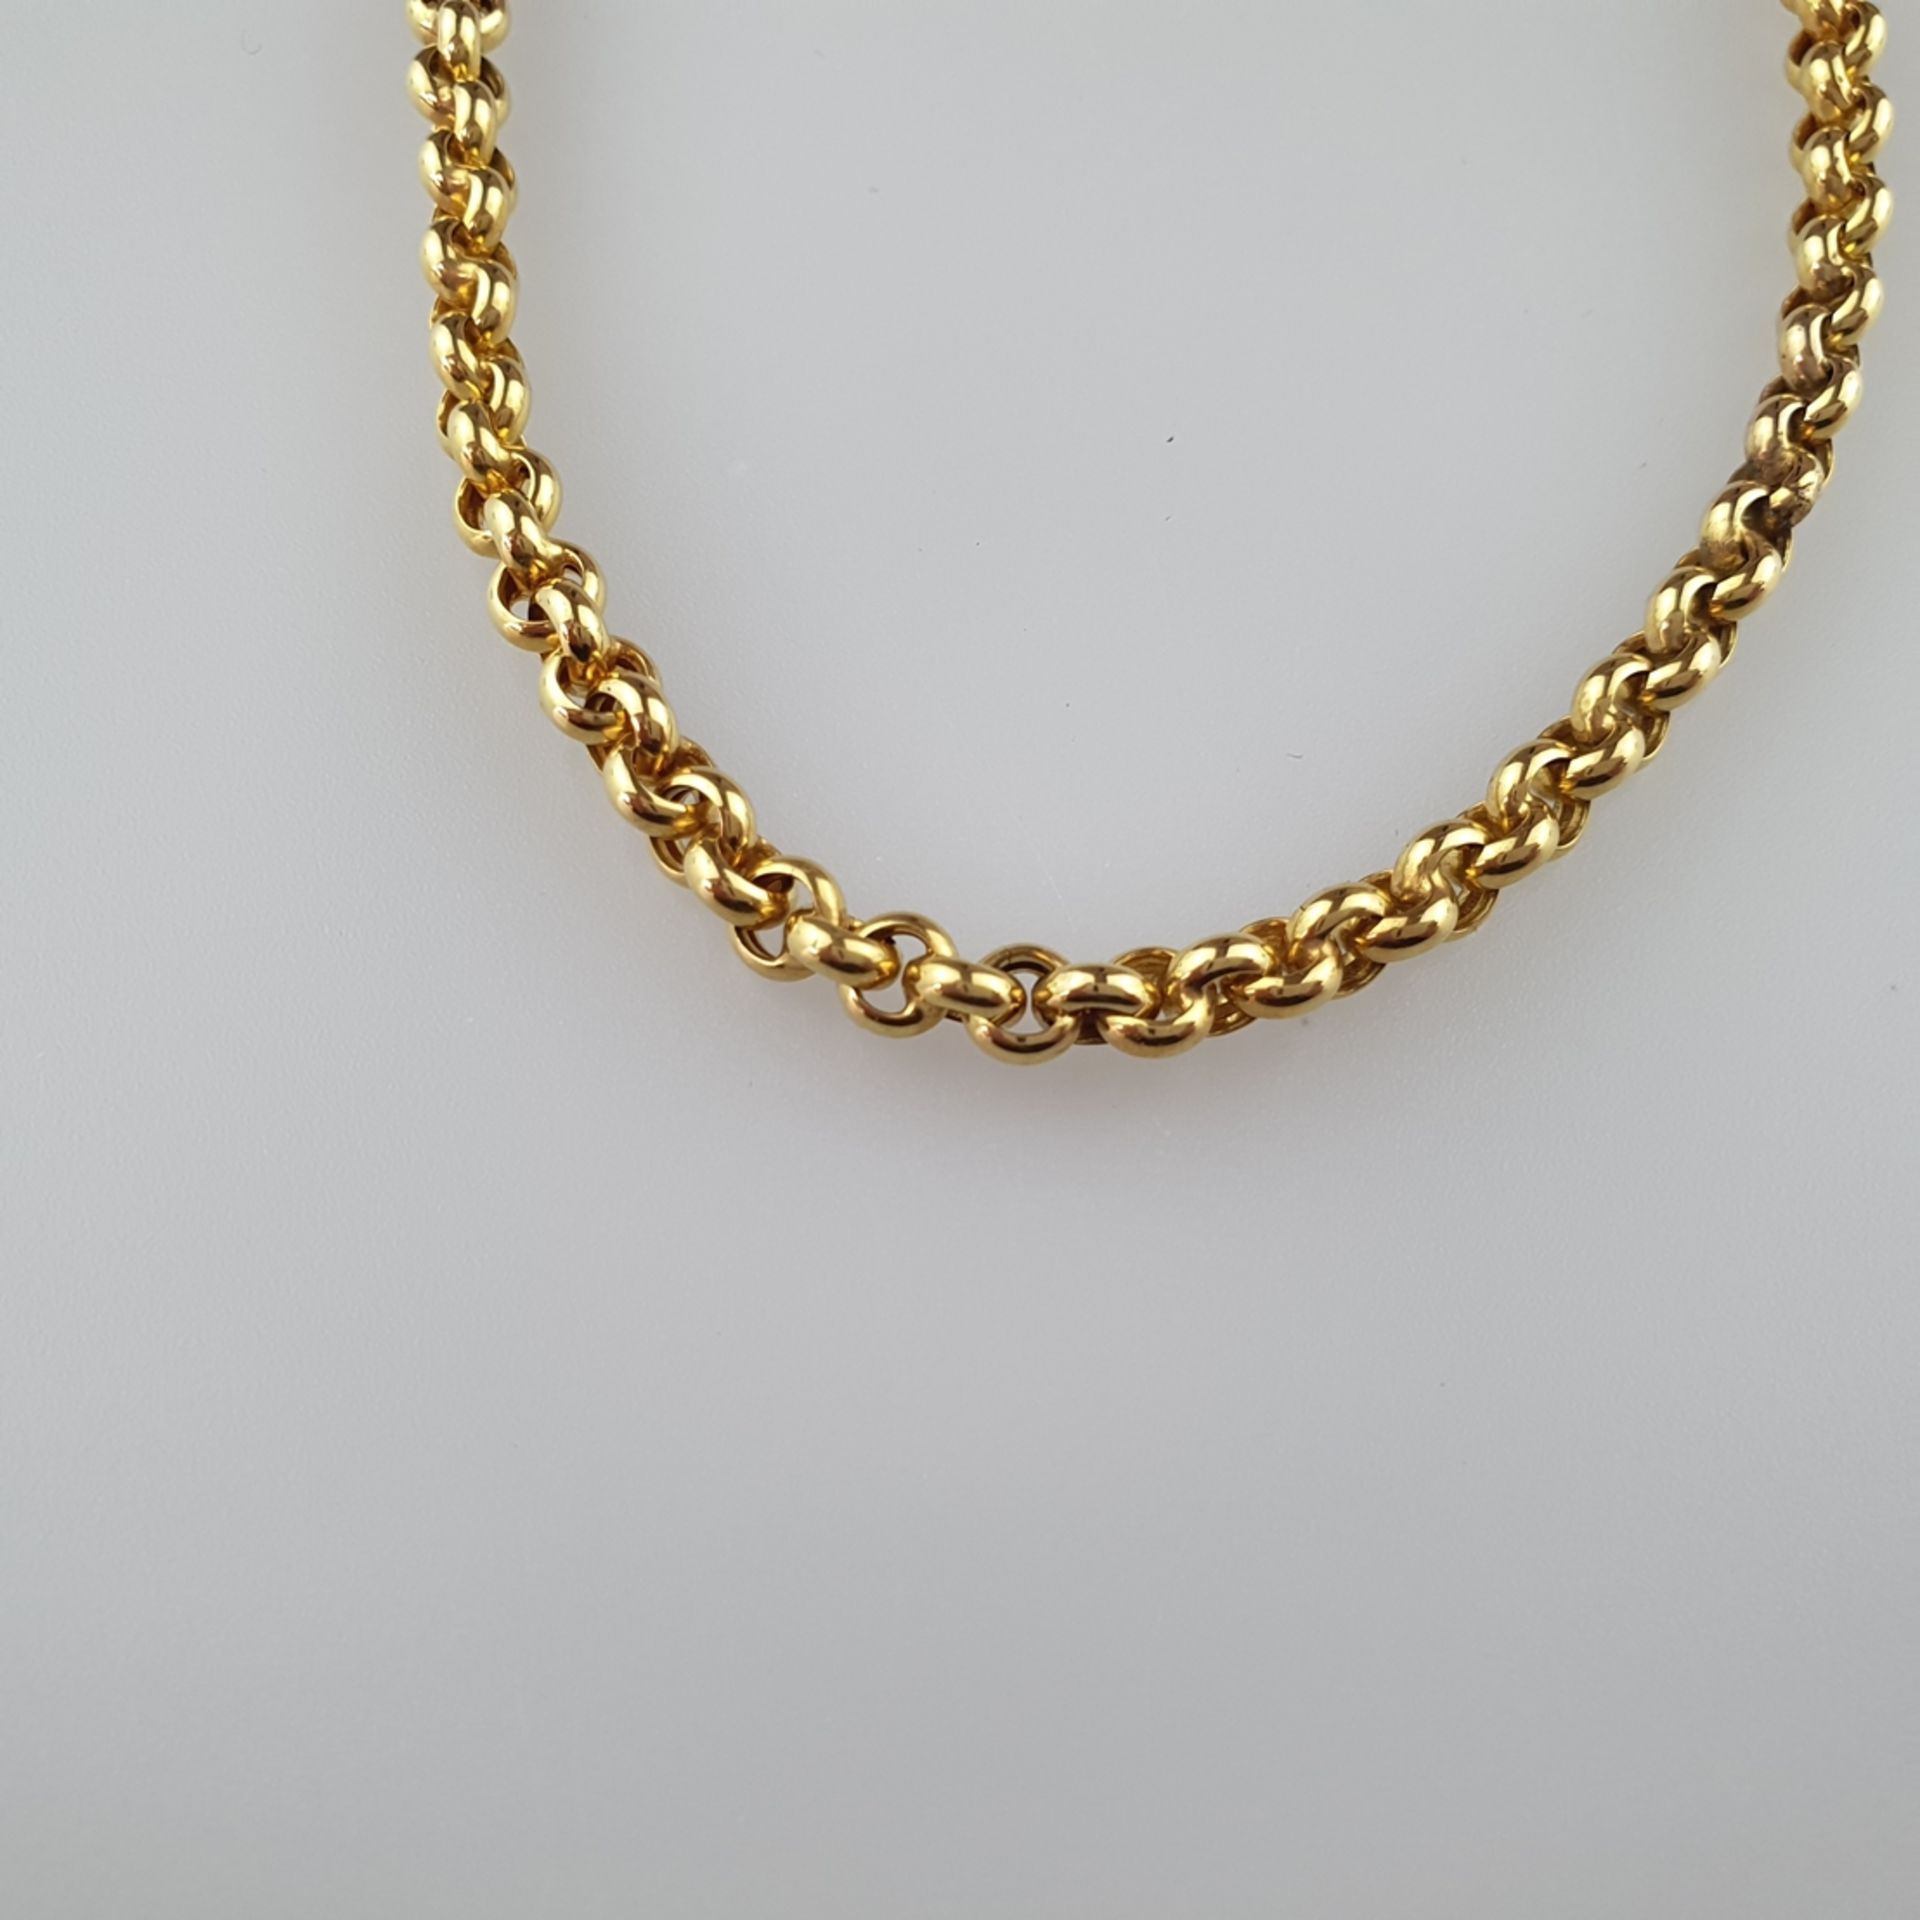 Goldkette - Gelbgold 333/000, kurze Kette aus ringförmigen Gliedern, ca. 43cm lang, ca. 13,1 g - Image 2 of 4